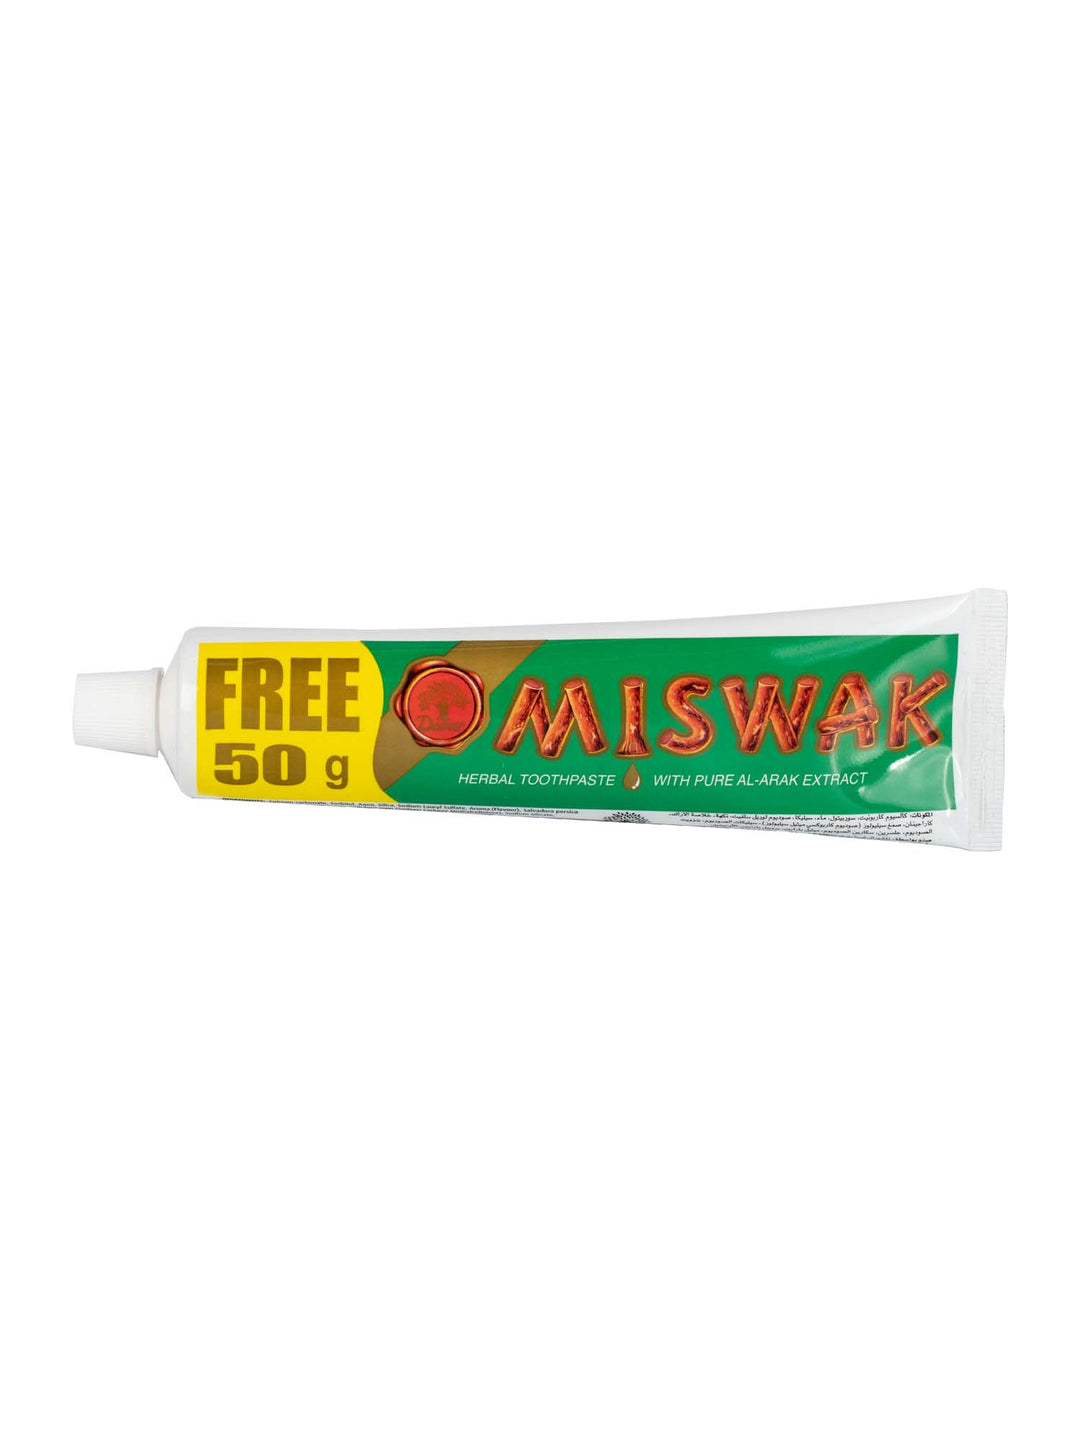 Dabur Miswak Herbal Toothpaste 120g + 50g Free - Halal